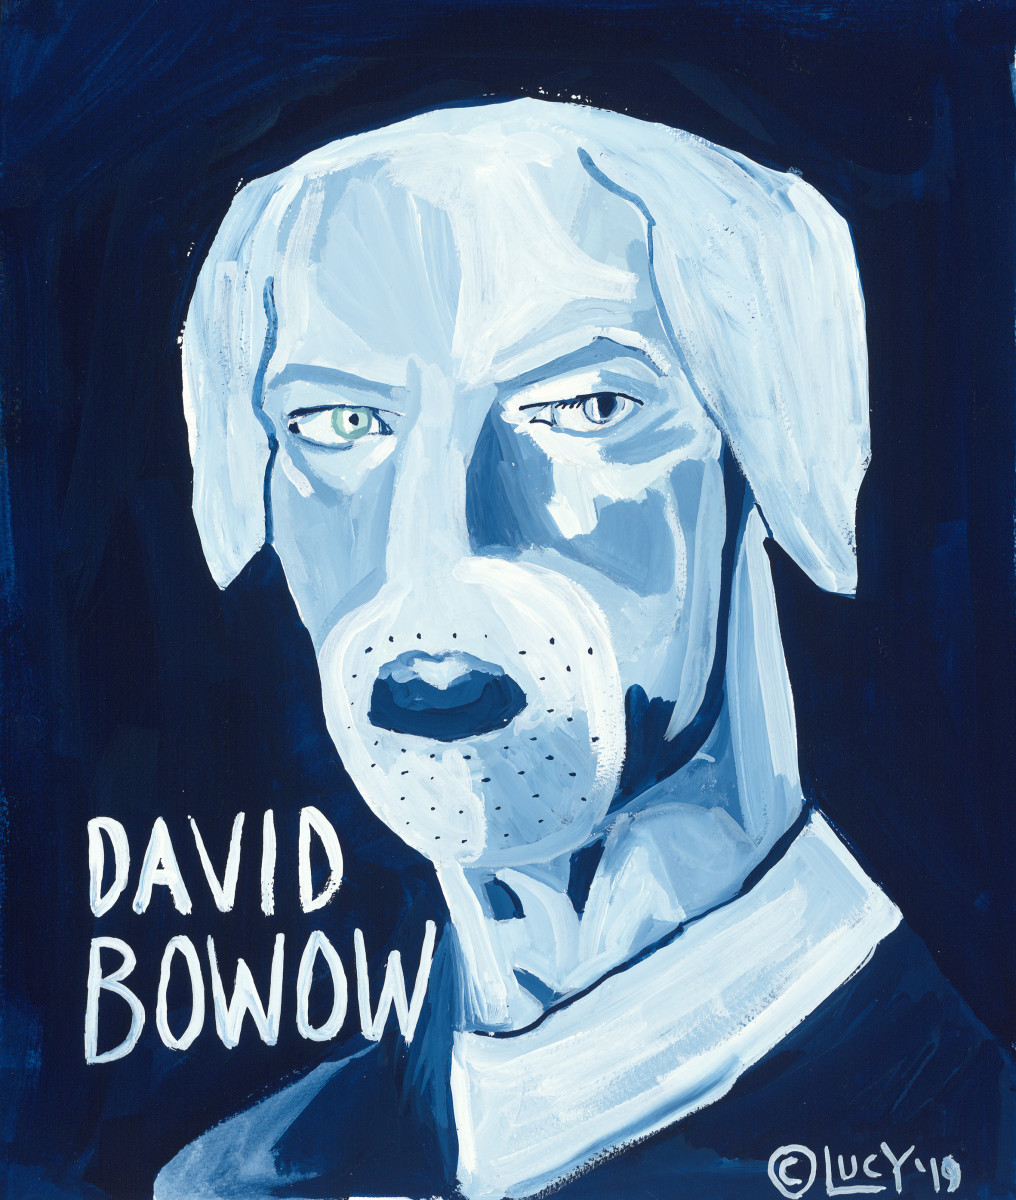 DAVID BOWOW by Lucy Marshall aka THE DOGOPHILE 